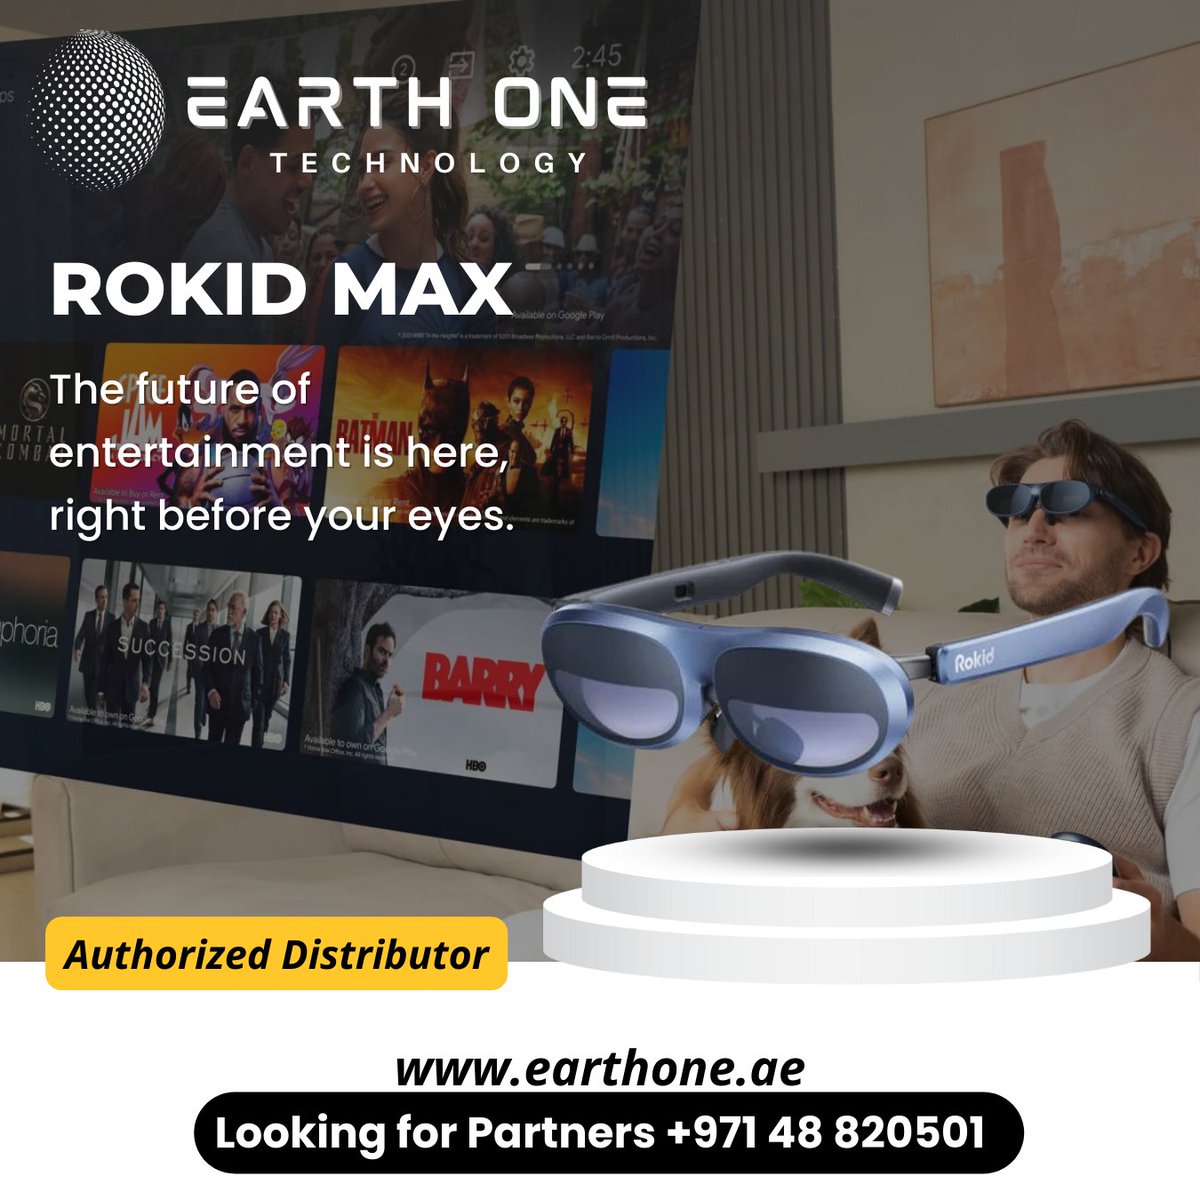 #earthone Rokid Max AR glasses

smpl.is/8oxtc

#earthonedubai #smarttech #dubaitech #earthonetec #earthonetech #gcc #arglasses #rokidmax #rokidmaxglasses #rokidglasses